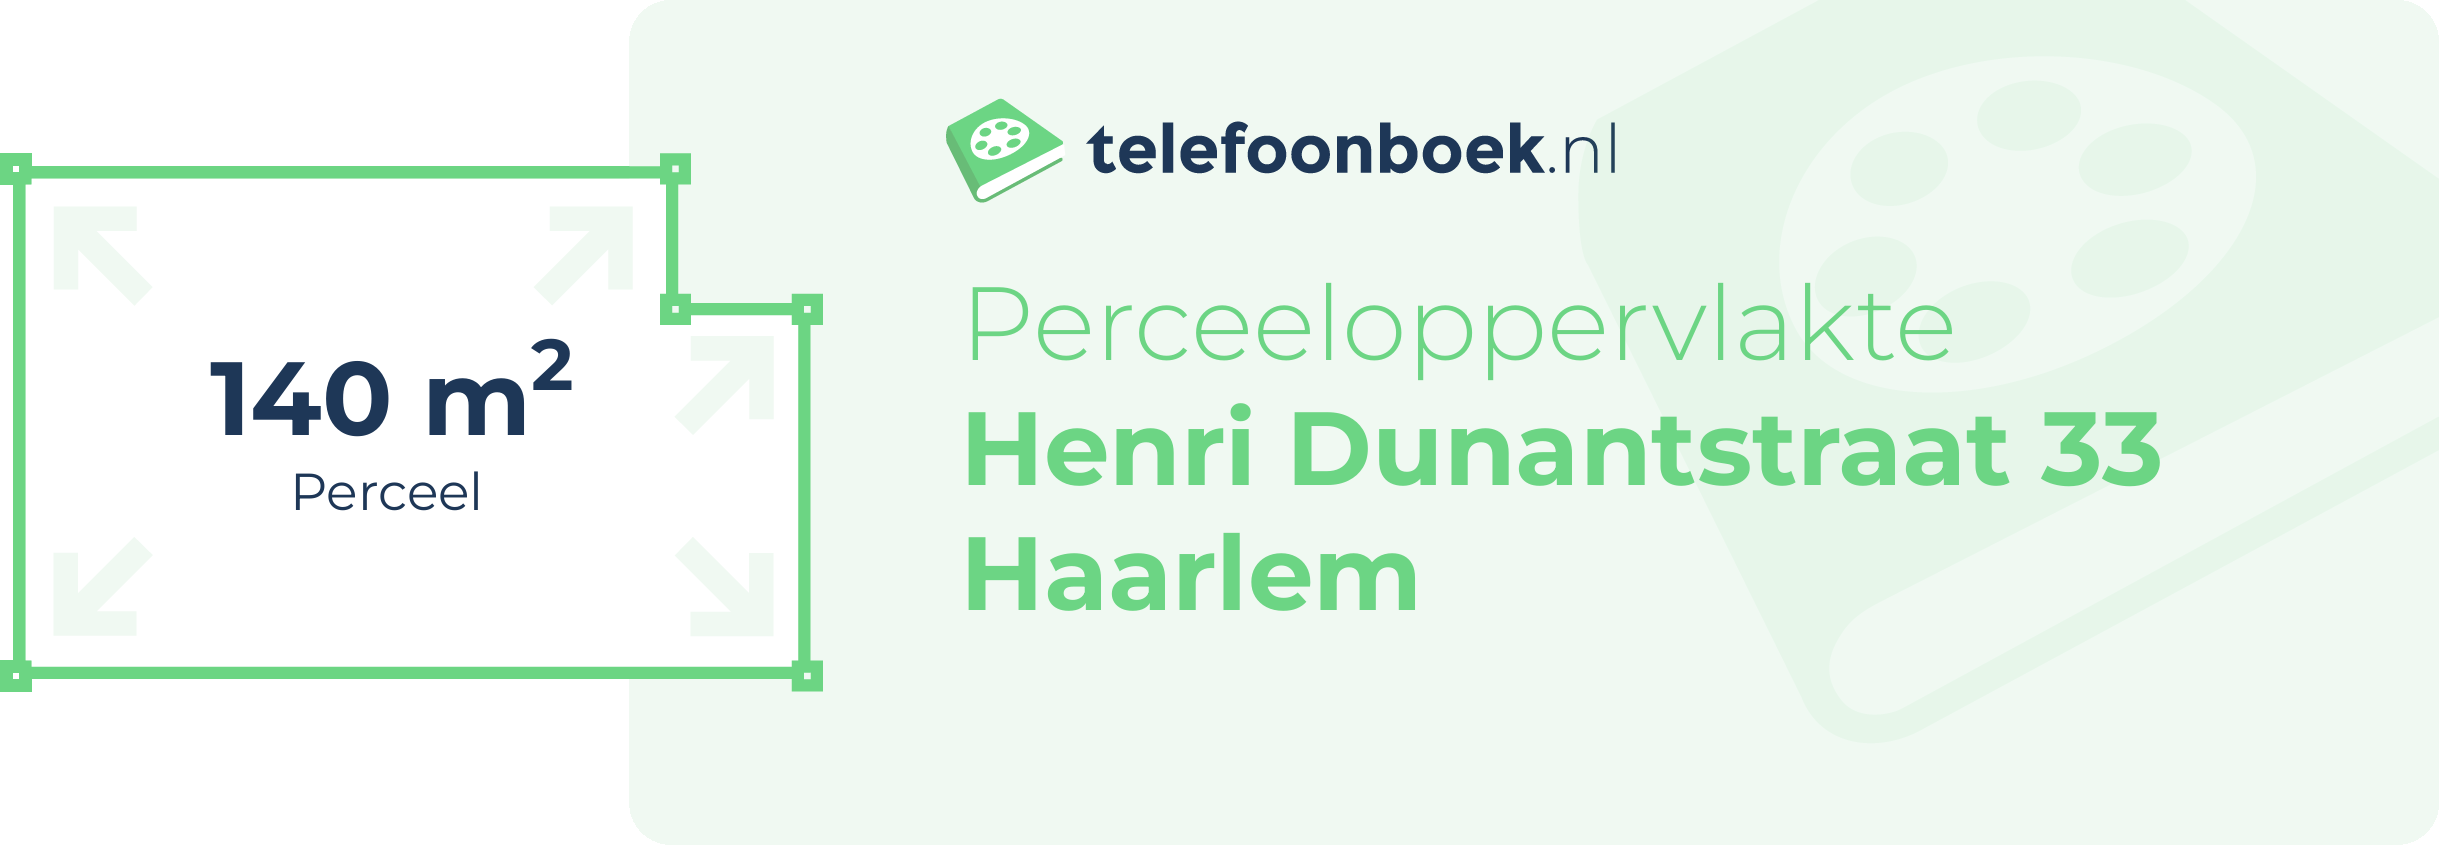 Perceeloppervlakte Henri Dunantstraat 33 Haarlem